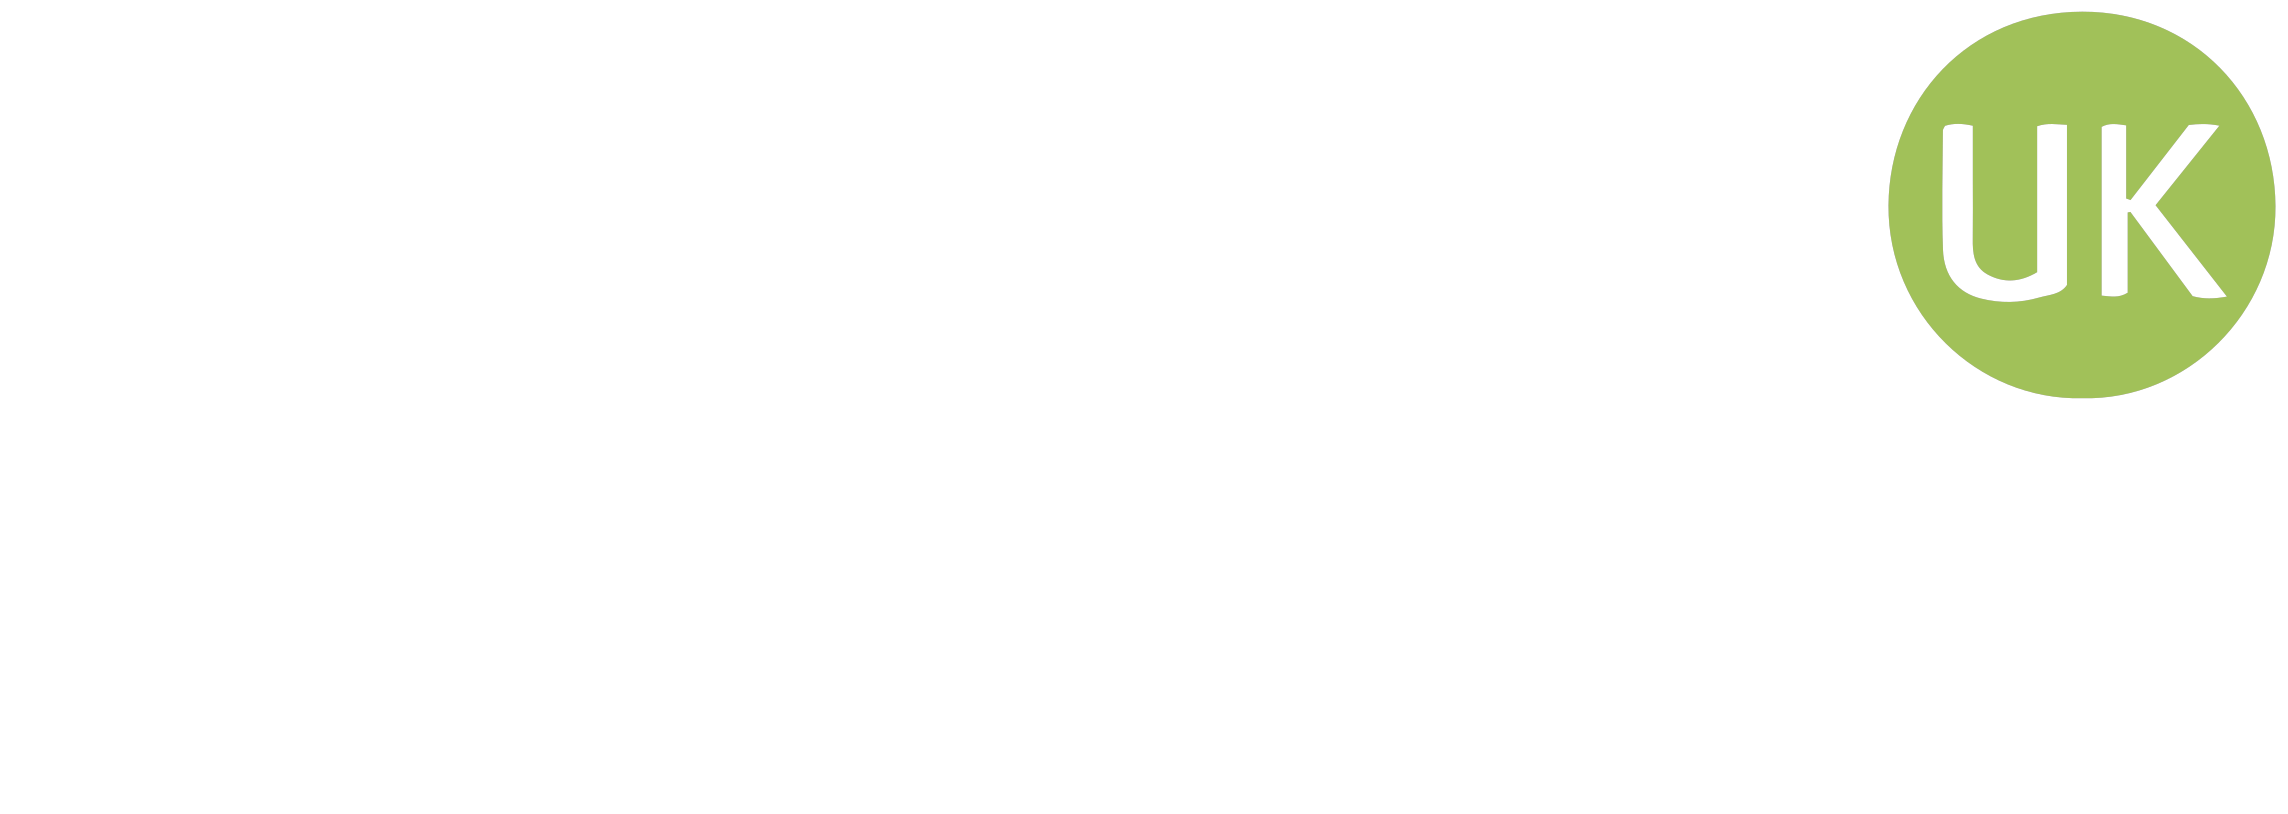 TreesUK logo white